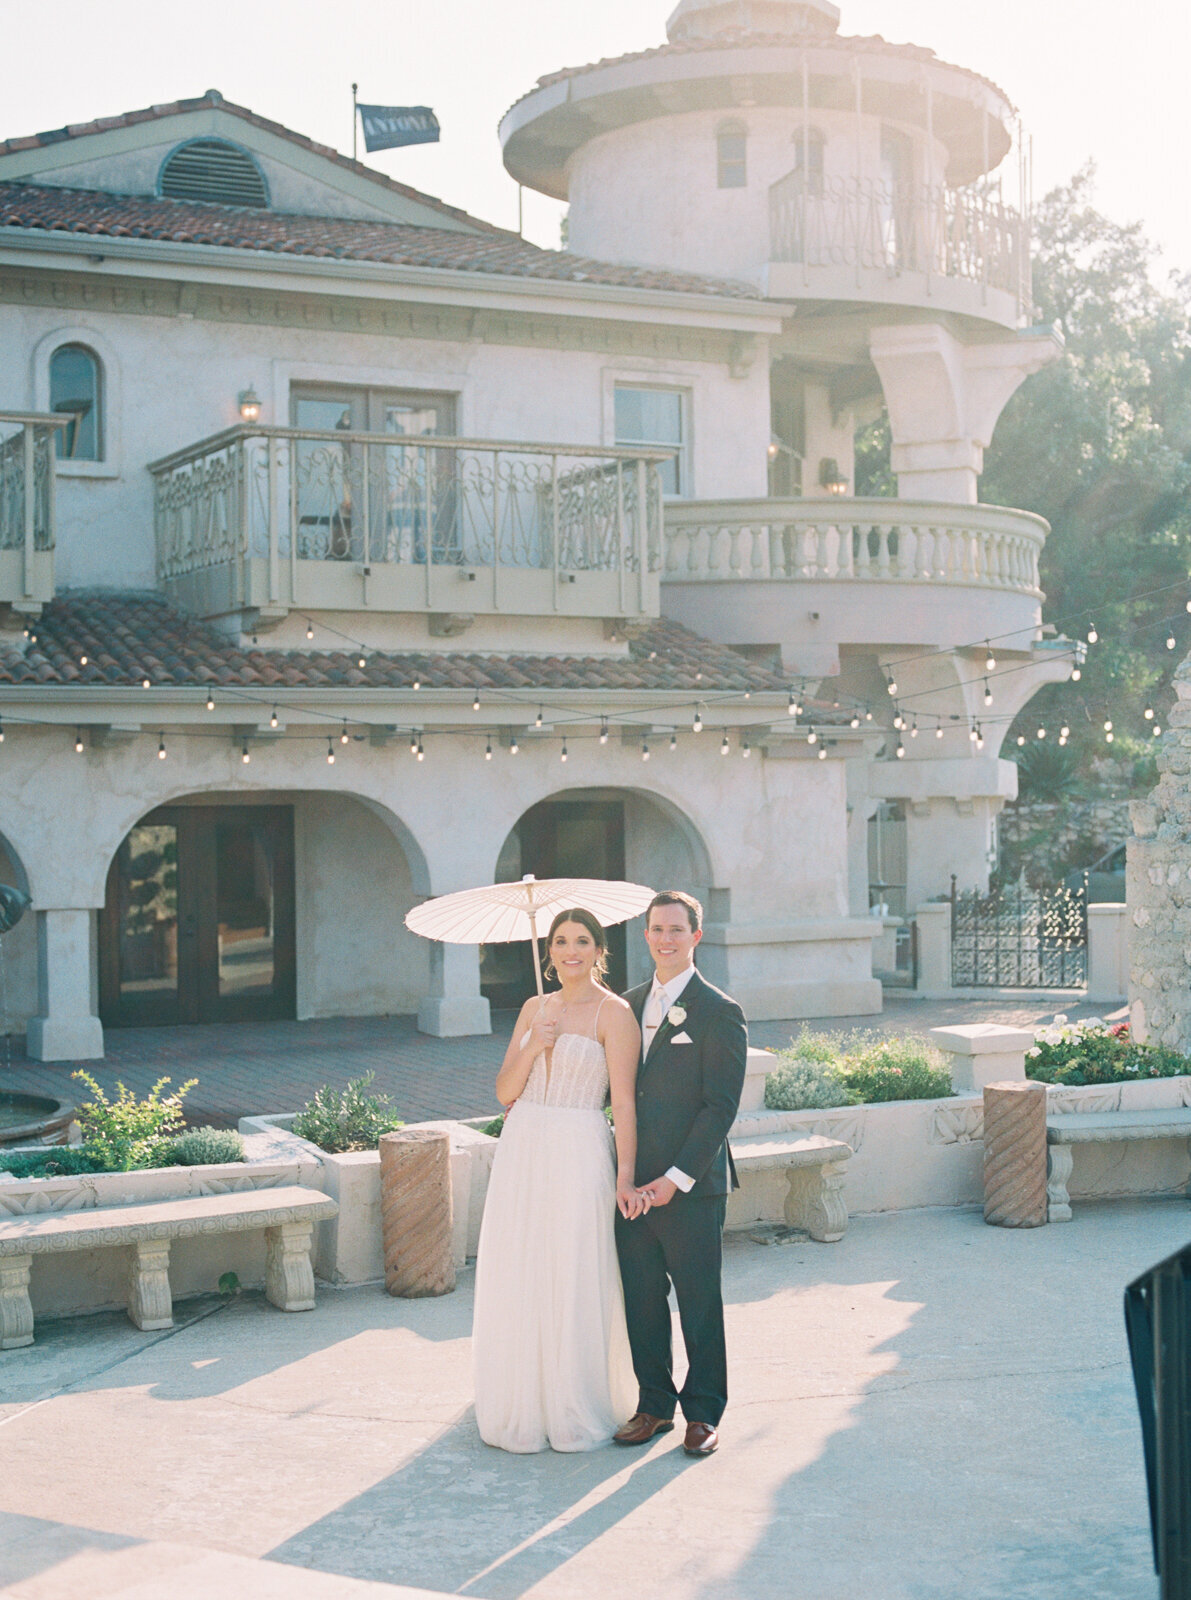 Villa Antonia - Austin Texas - Nick & Peri Pattie - Stephanie Michelle Photography - @stephaniemichellephotog-191